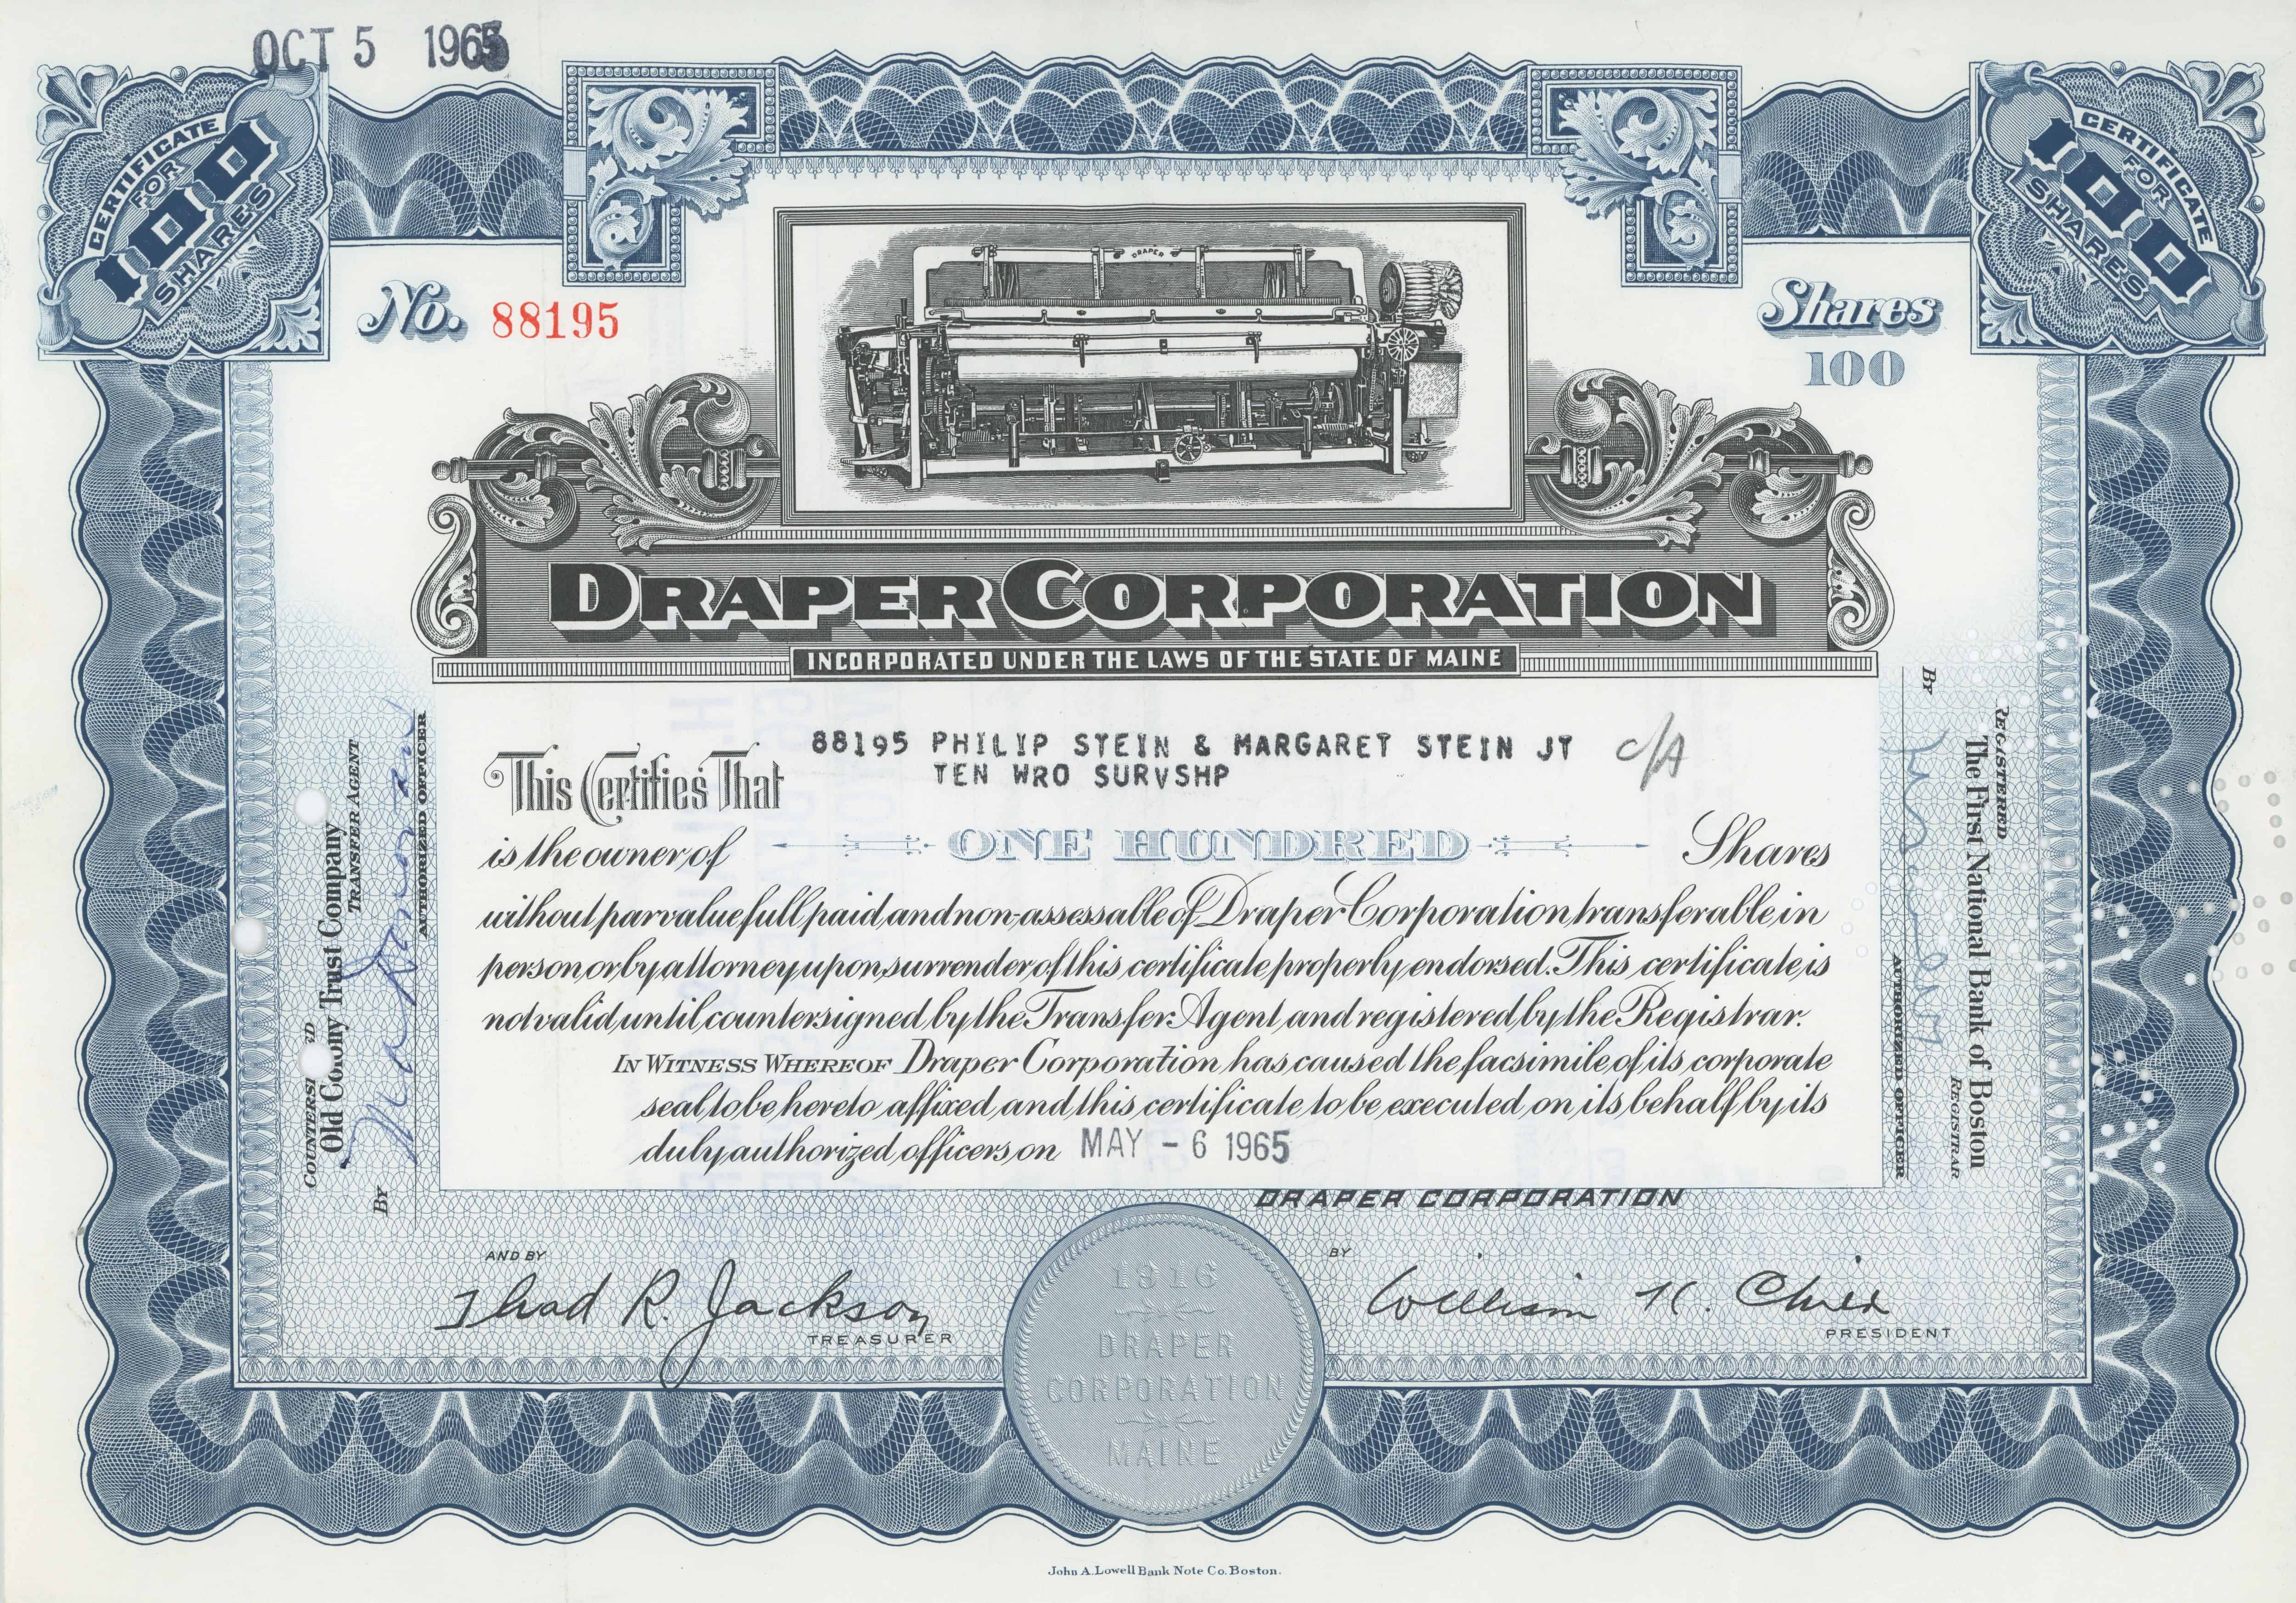 100 akcji Draper Corporation z 6 maja 1965 roku